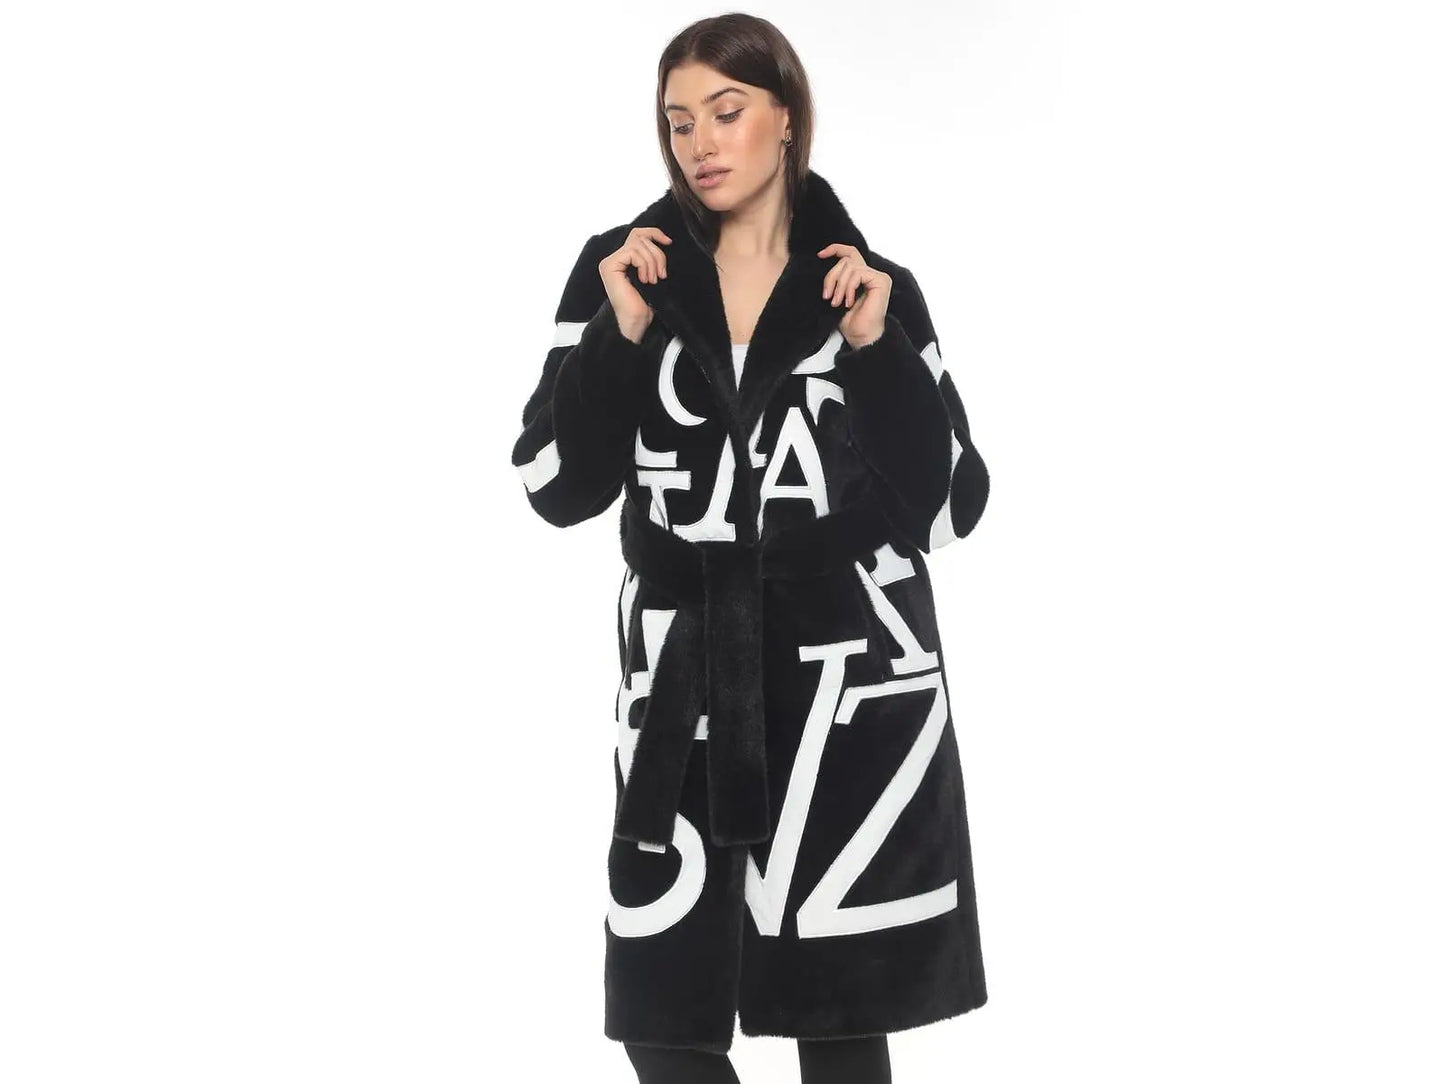 Black Lama Wool Knee-Length Coat with Mink Fur Collar & Letter Design